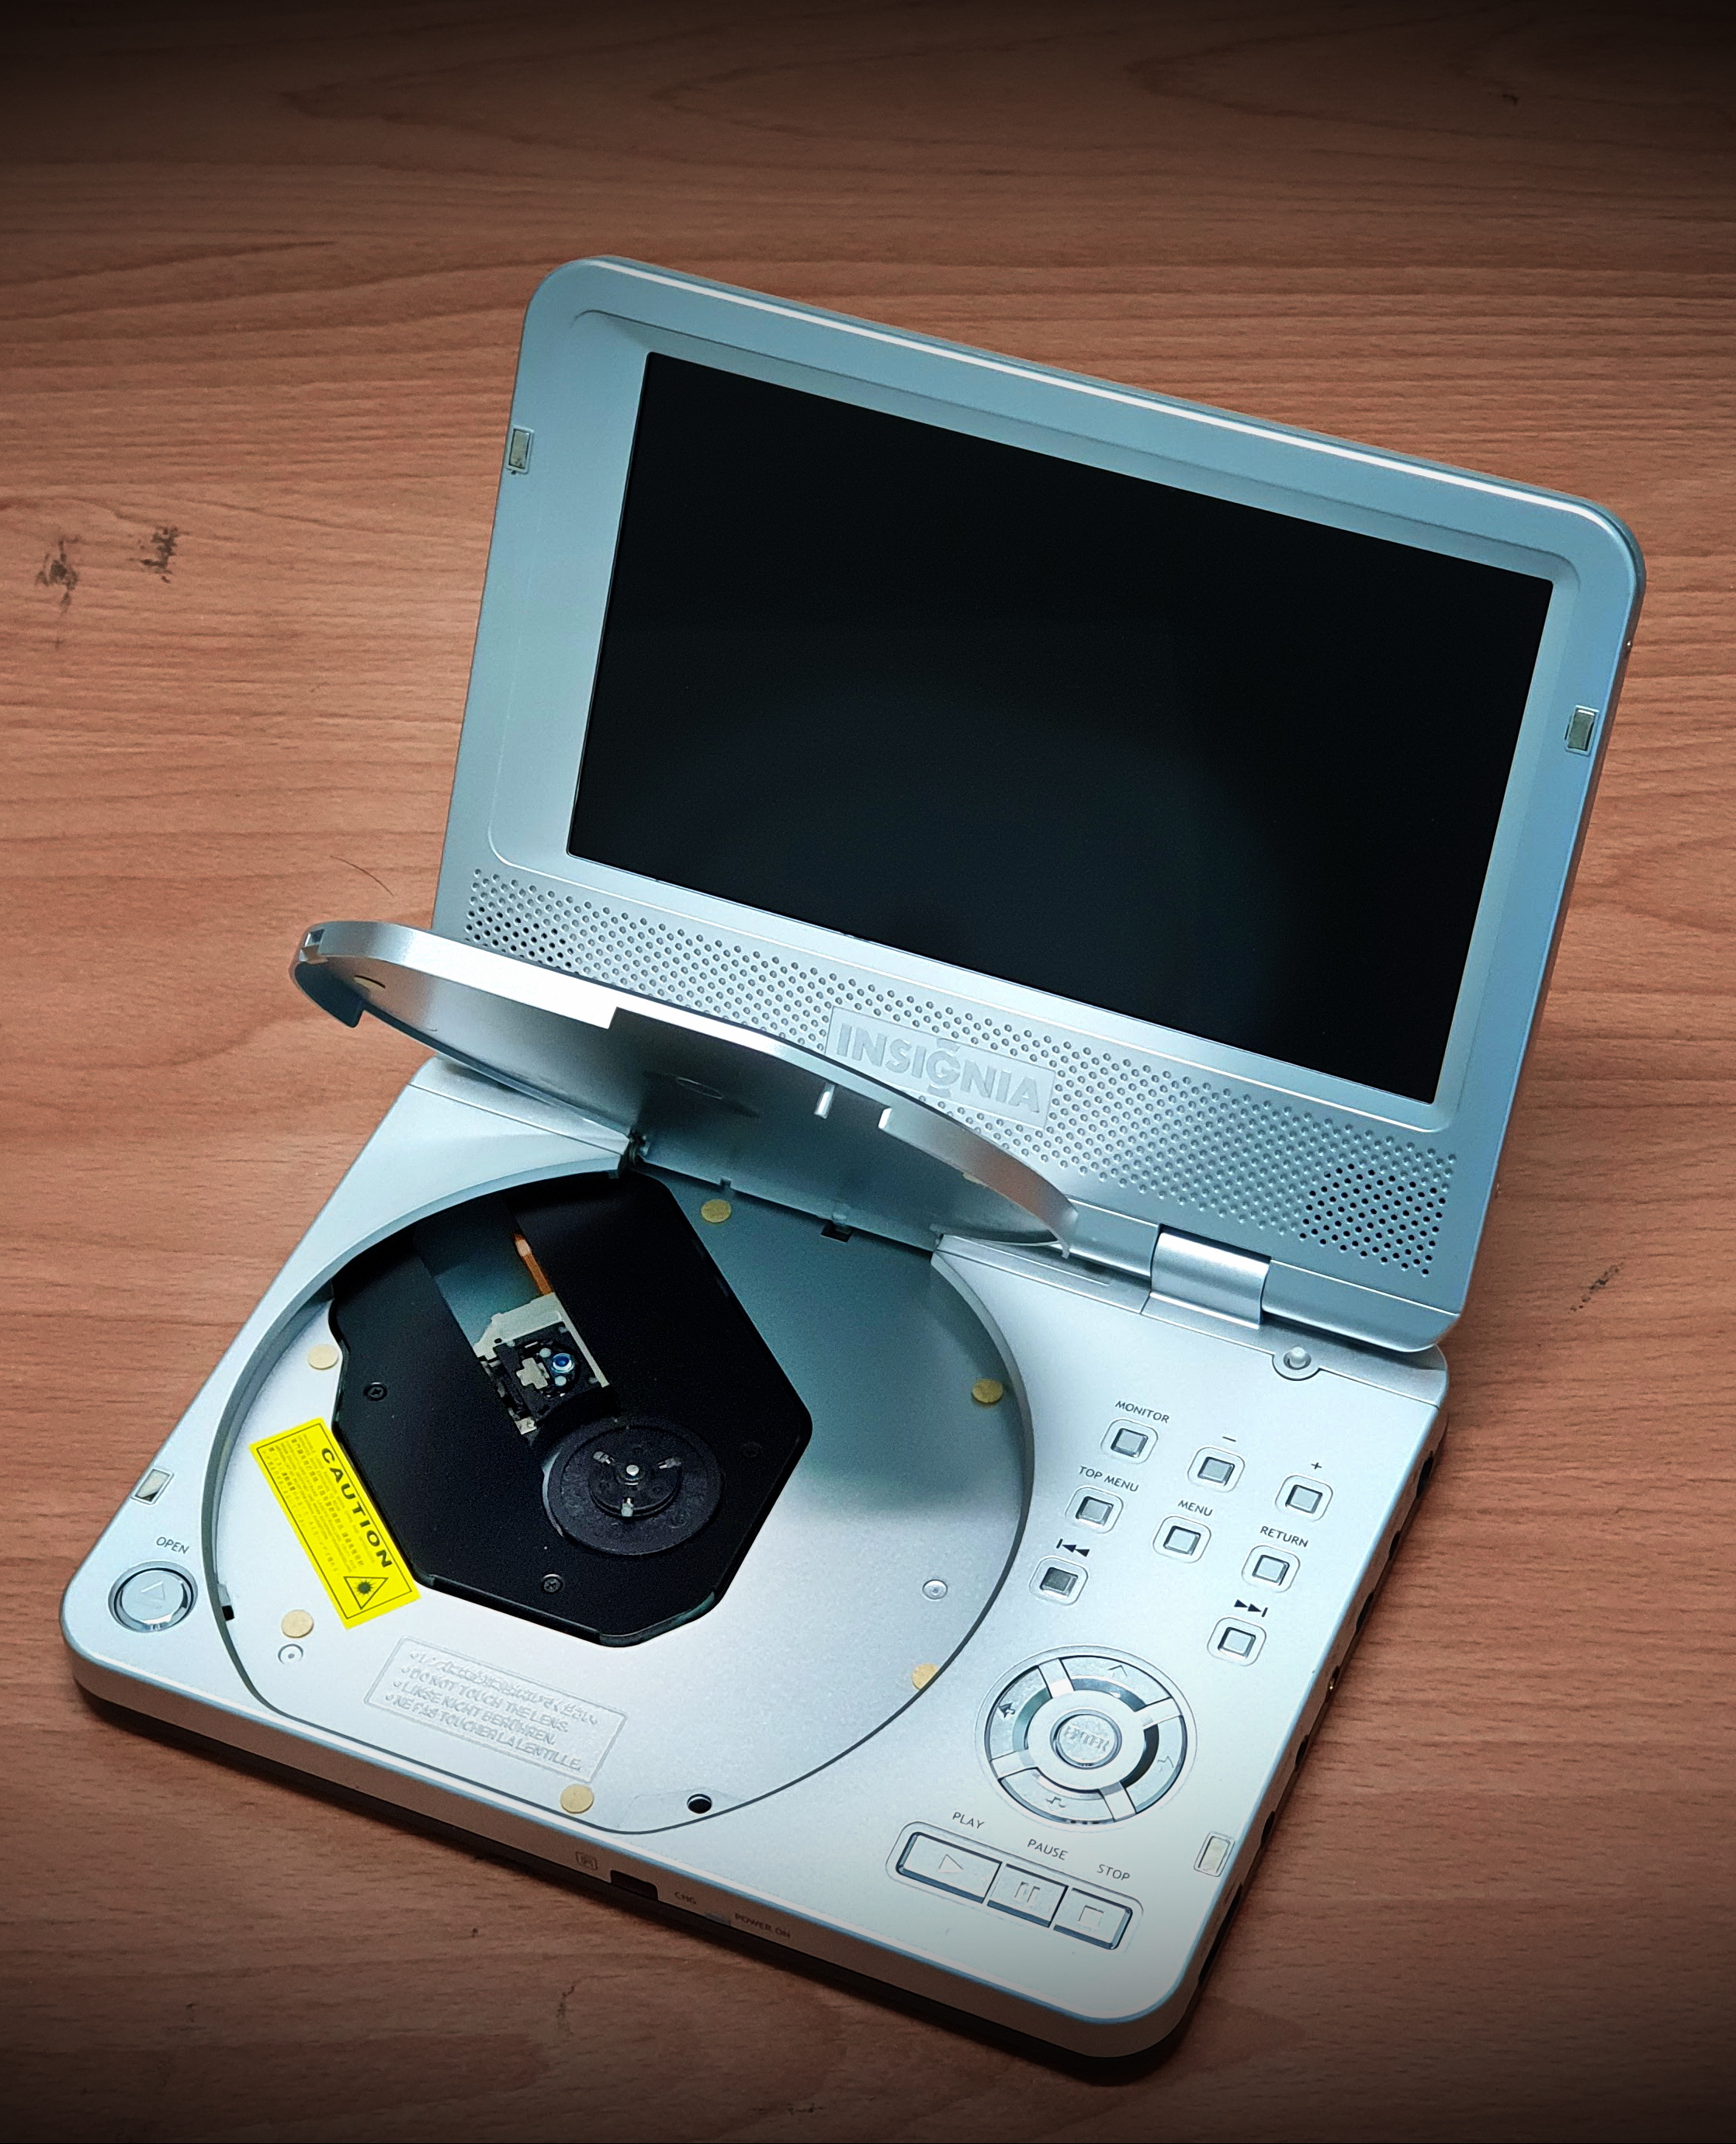 File:Portable DVD player.jpg - Wikipedia